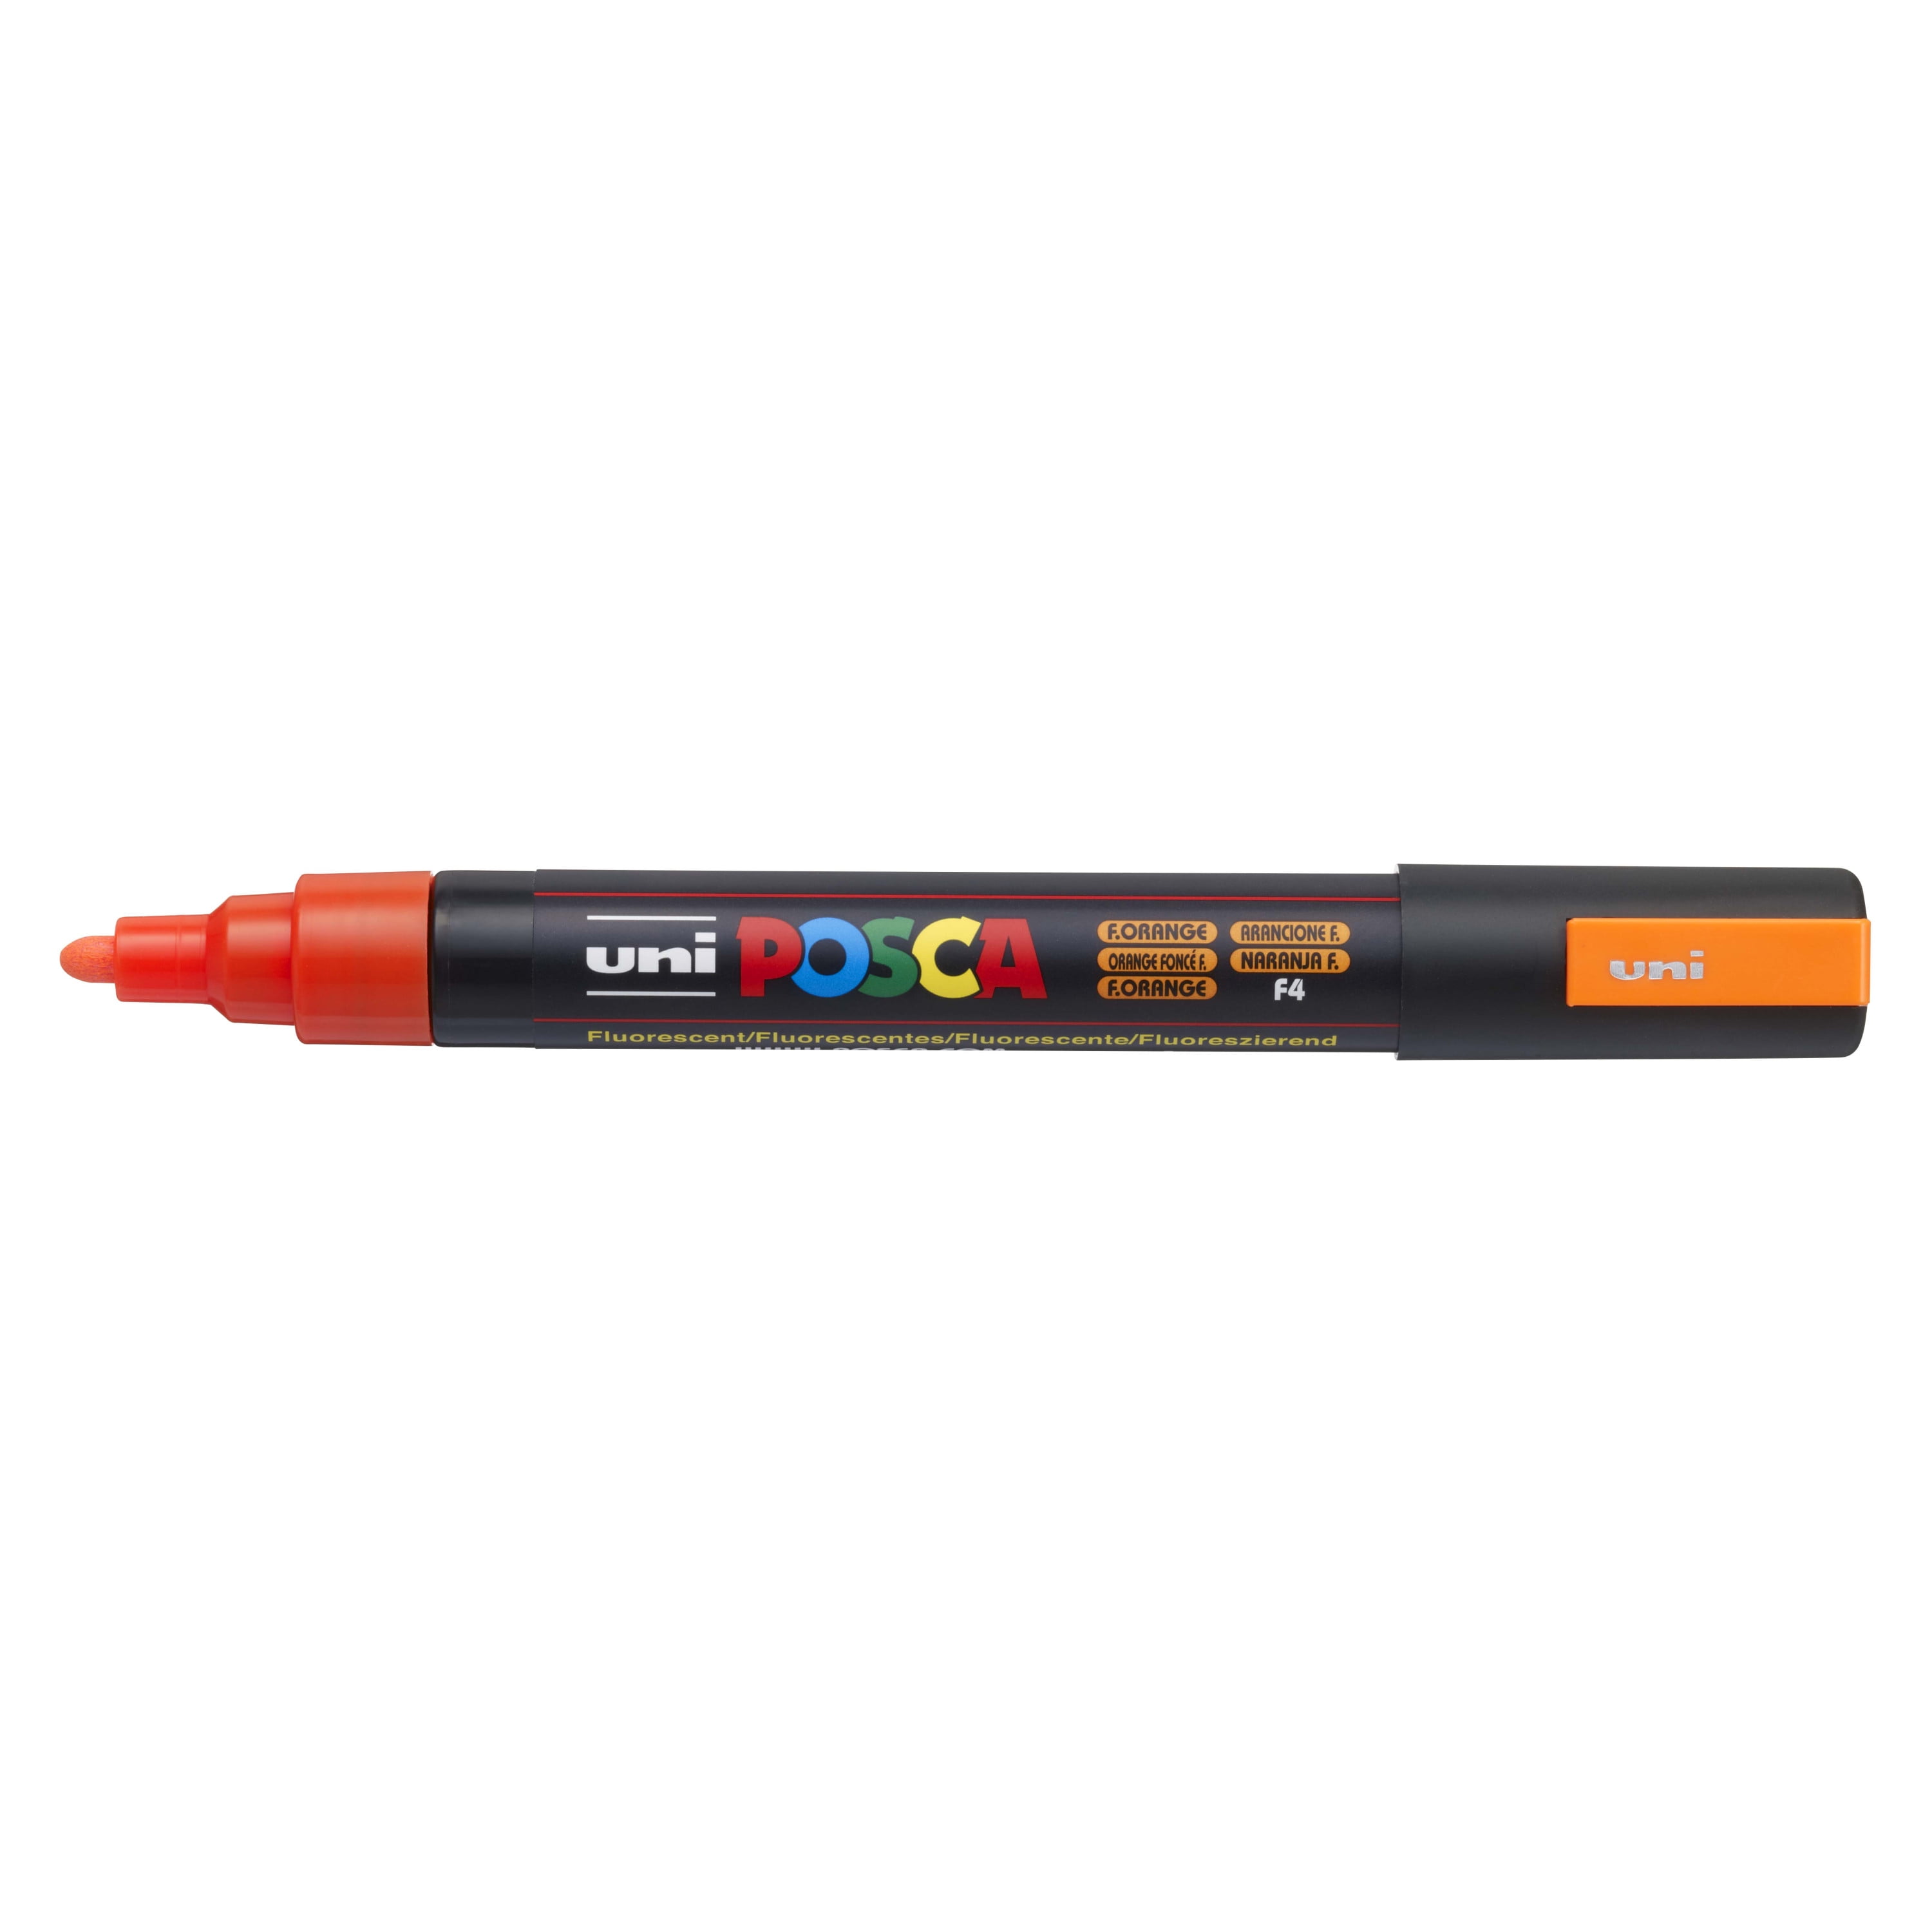 Posca Paint Markers Set of 4 Assorted - 2.5mm Medium Bullet Tip